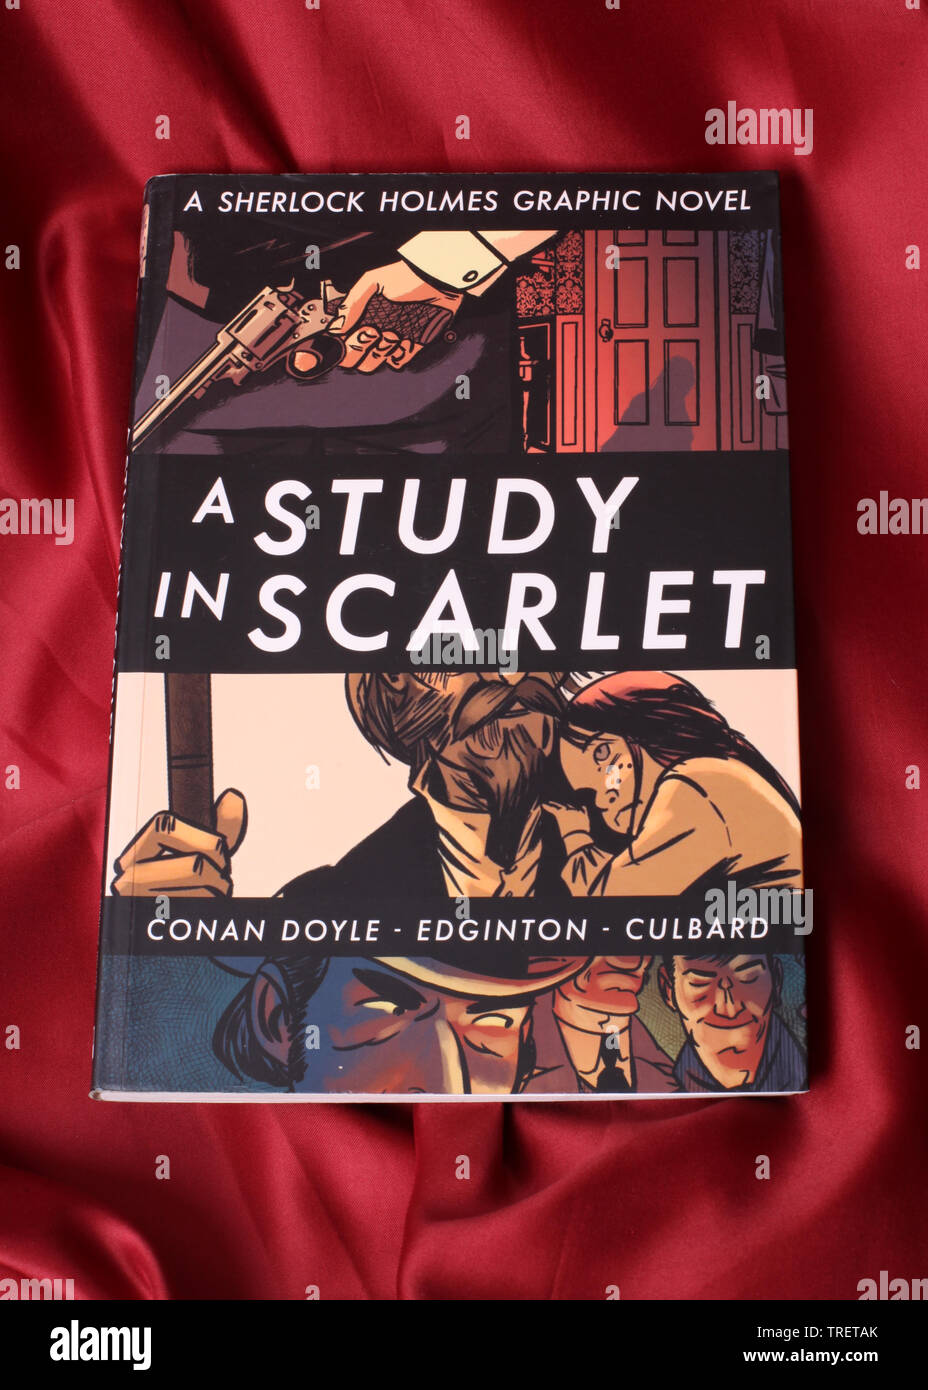 Sir Arthur Conan Doyle's Sherlock Holmes A Study in Scarlet graphic novel adaption by Edginton and Culbard, 2010, book cover Stock Photo